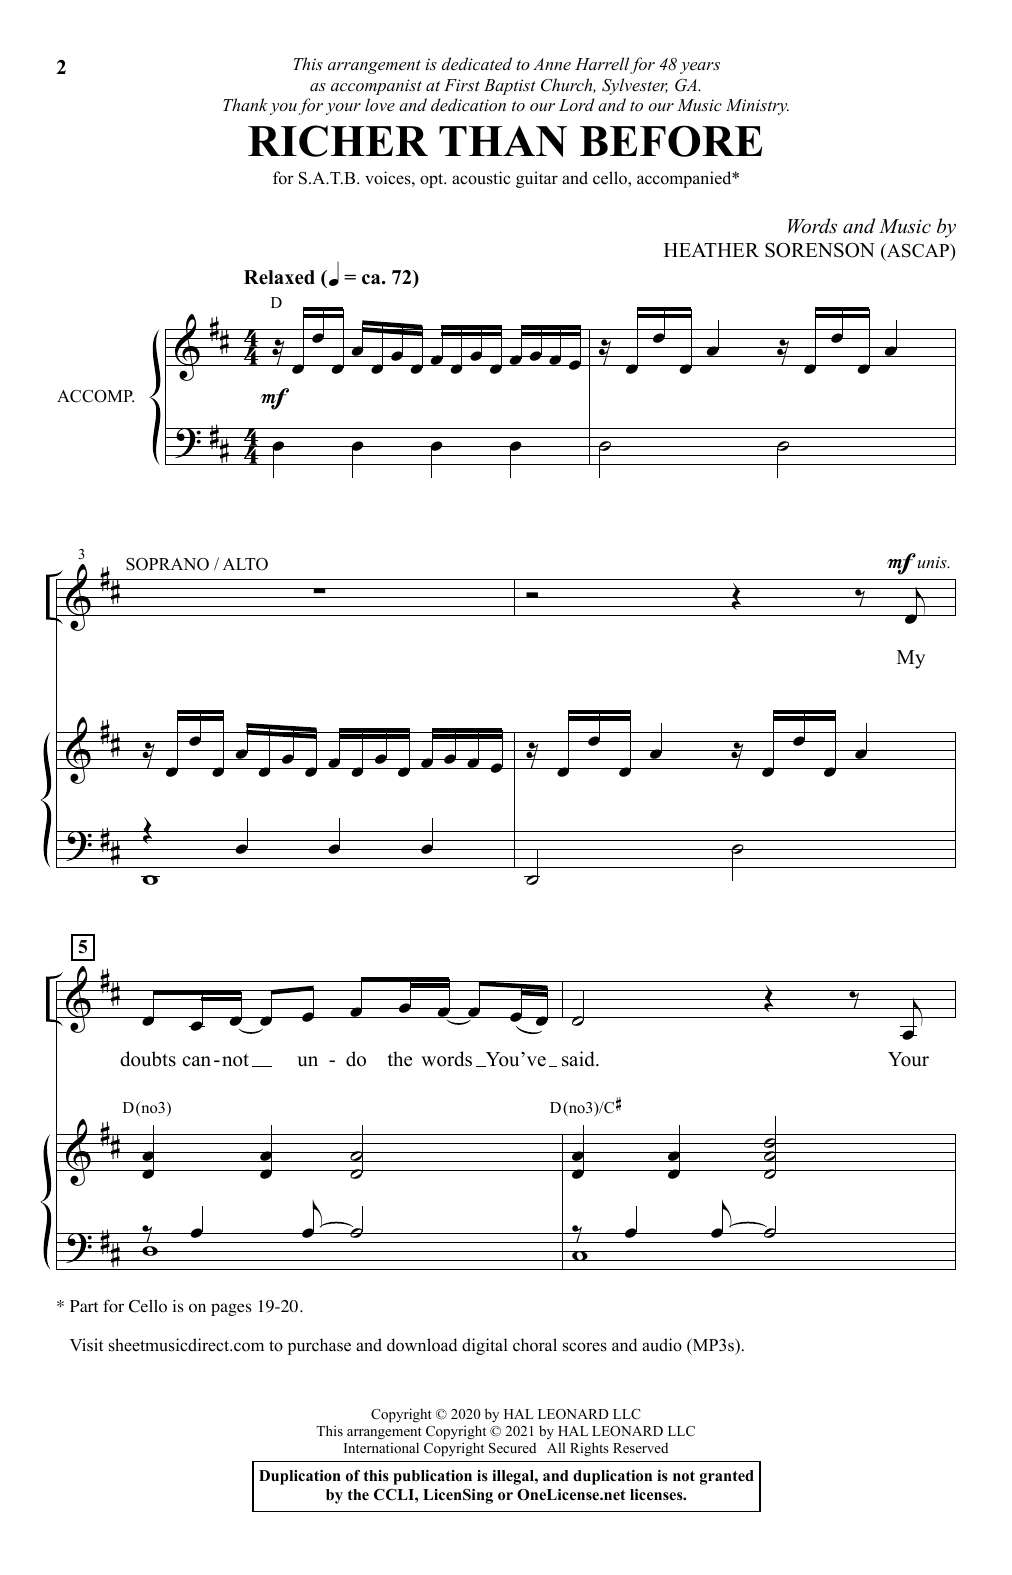 Heather Sorenson Richer Than Before Sheet Music Notes & Chords for SATB Choir - Download or Print PDF